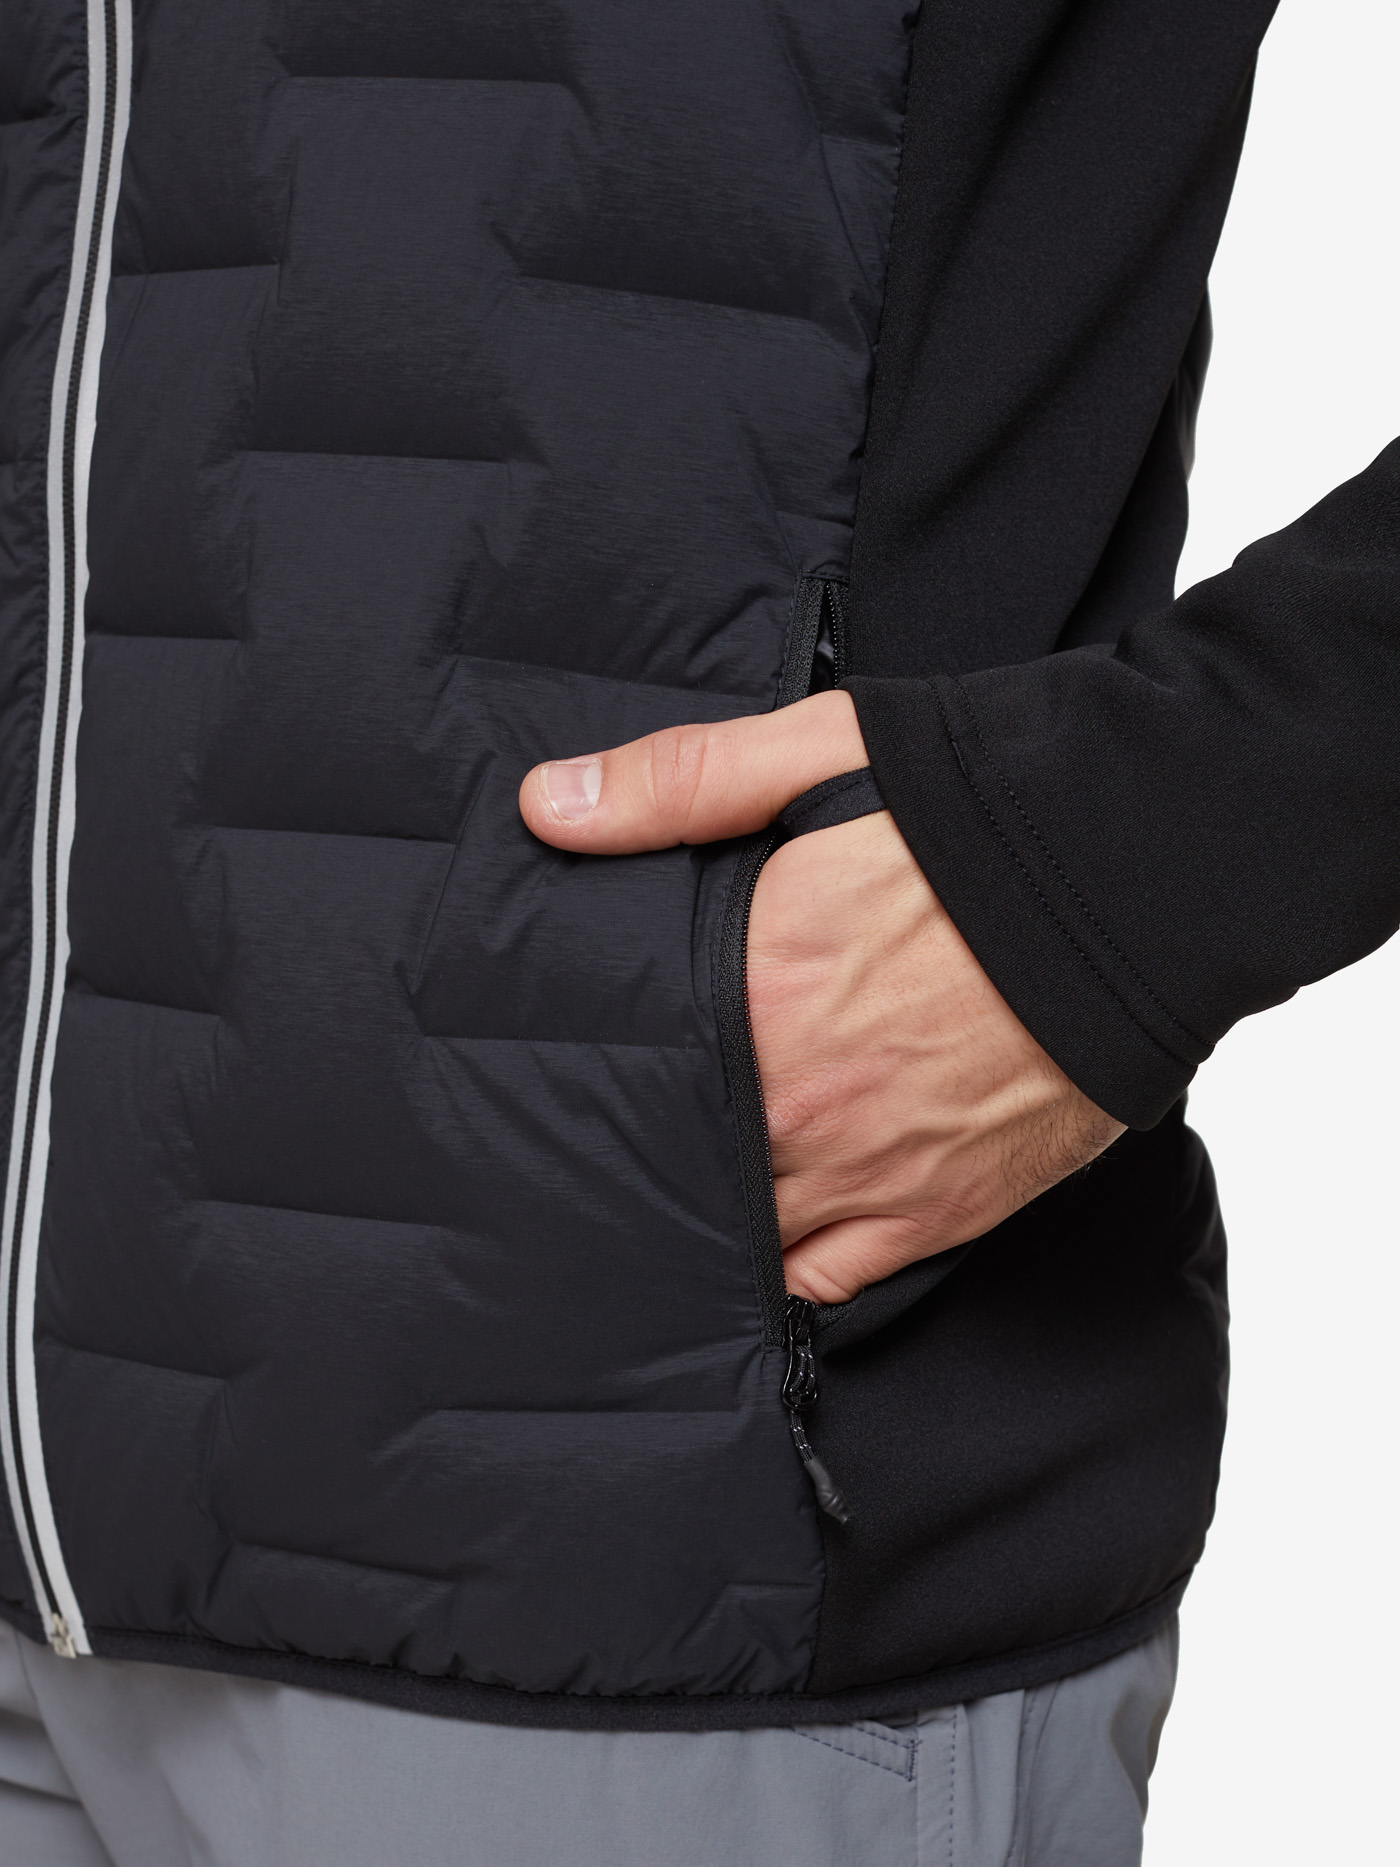 Куртка BASK, размер 50, цвет черный 19031-9009-050 Chamonix light hybrid v2 - фото 7